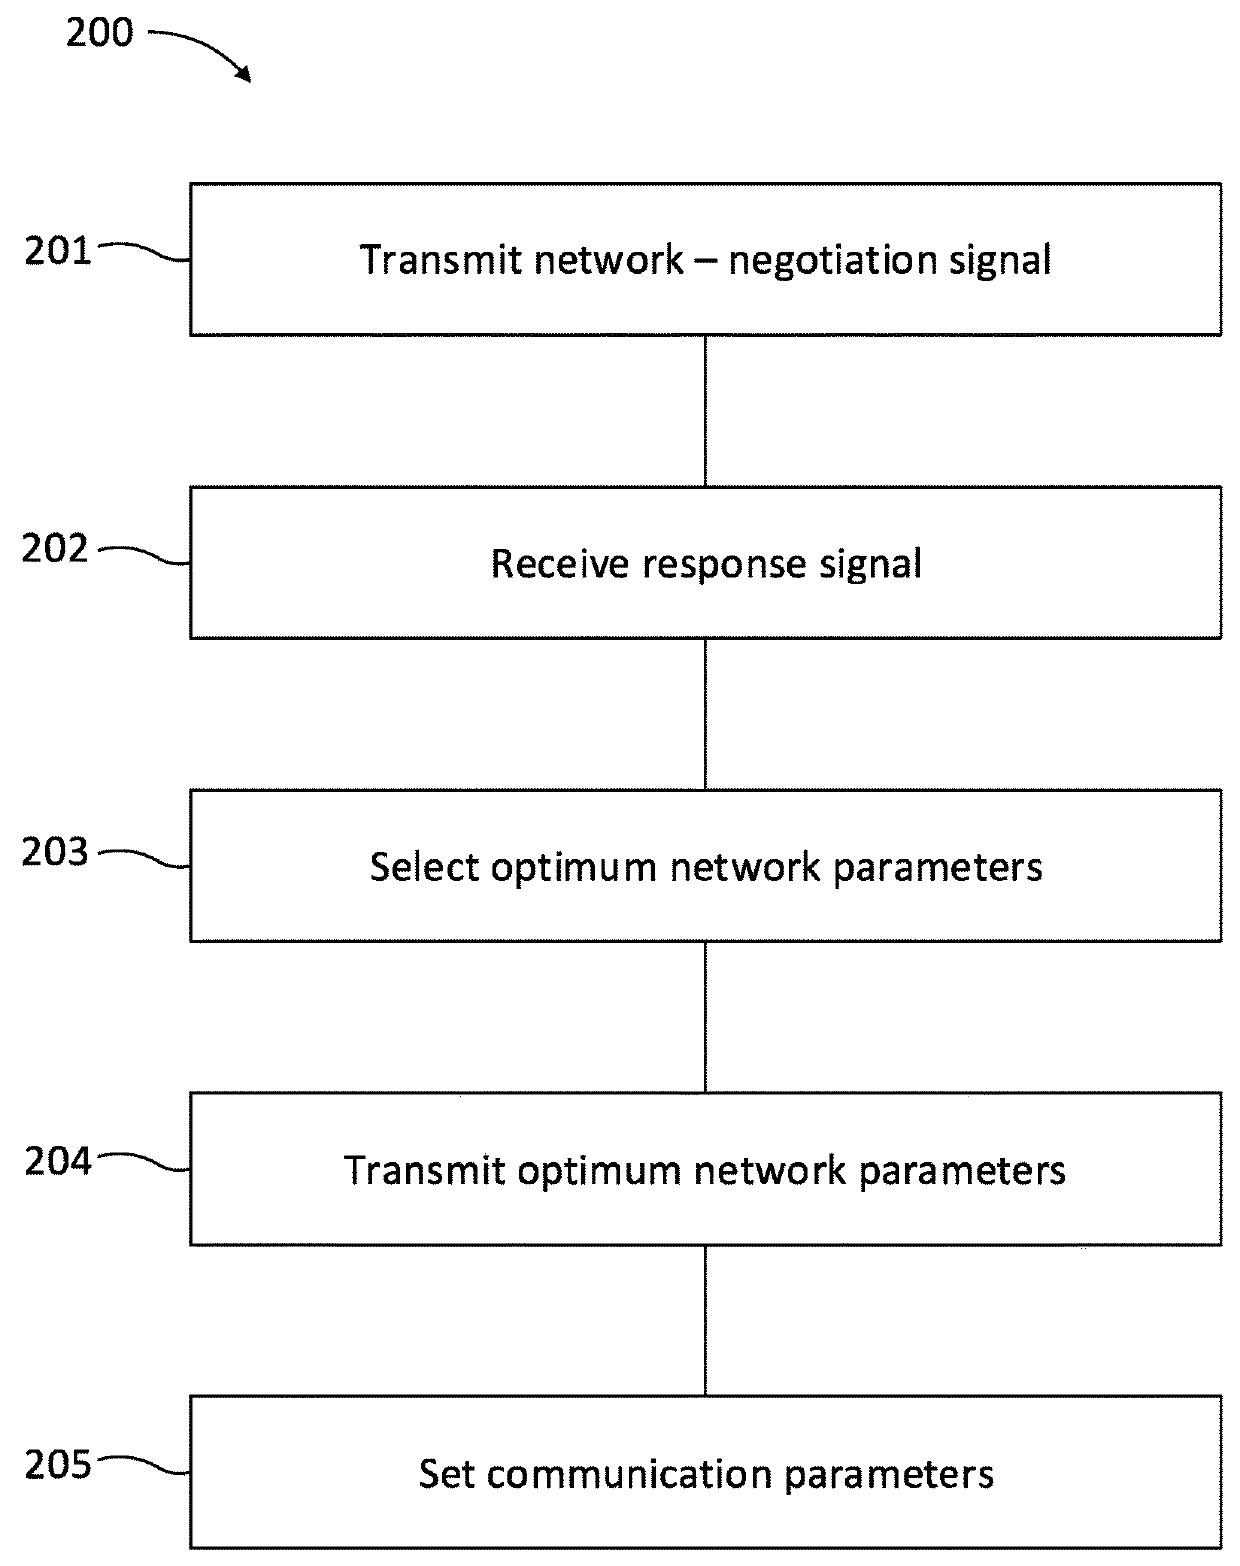 Wireless network negotiation and optimization